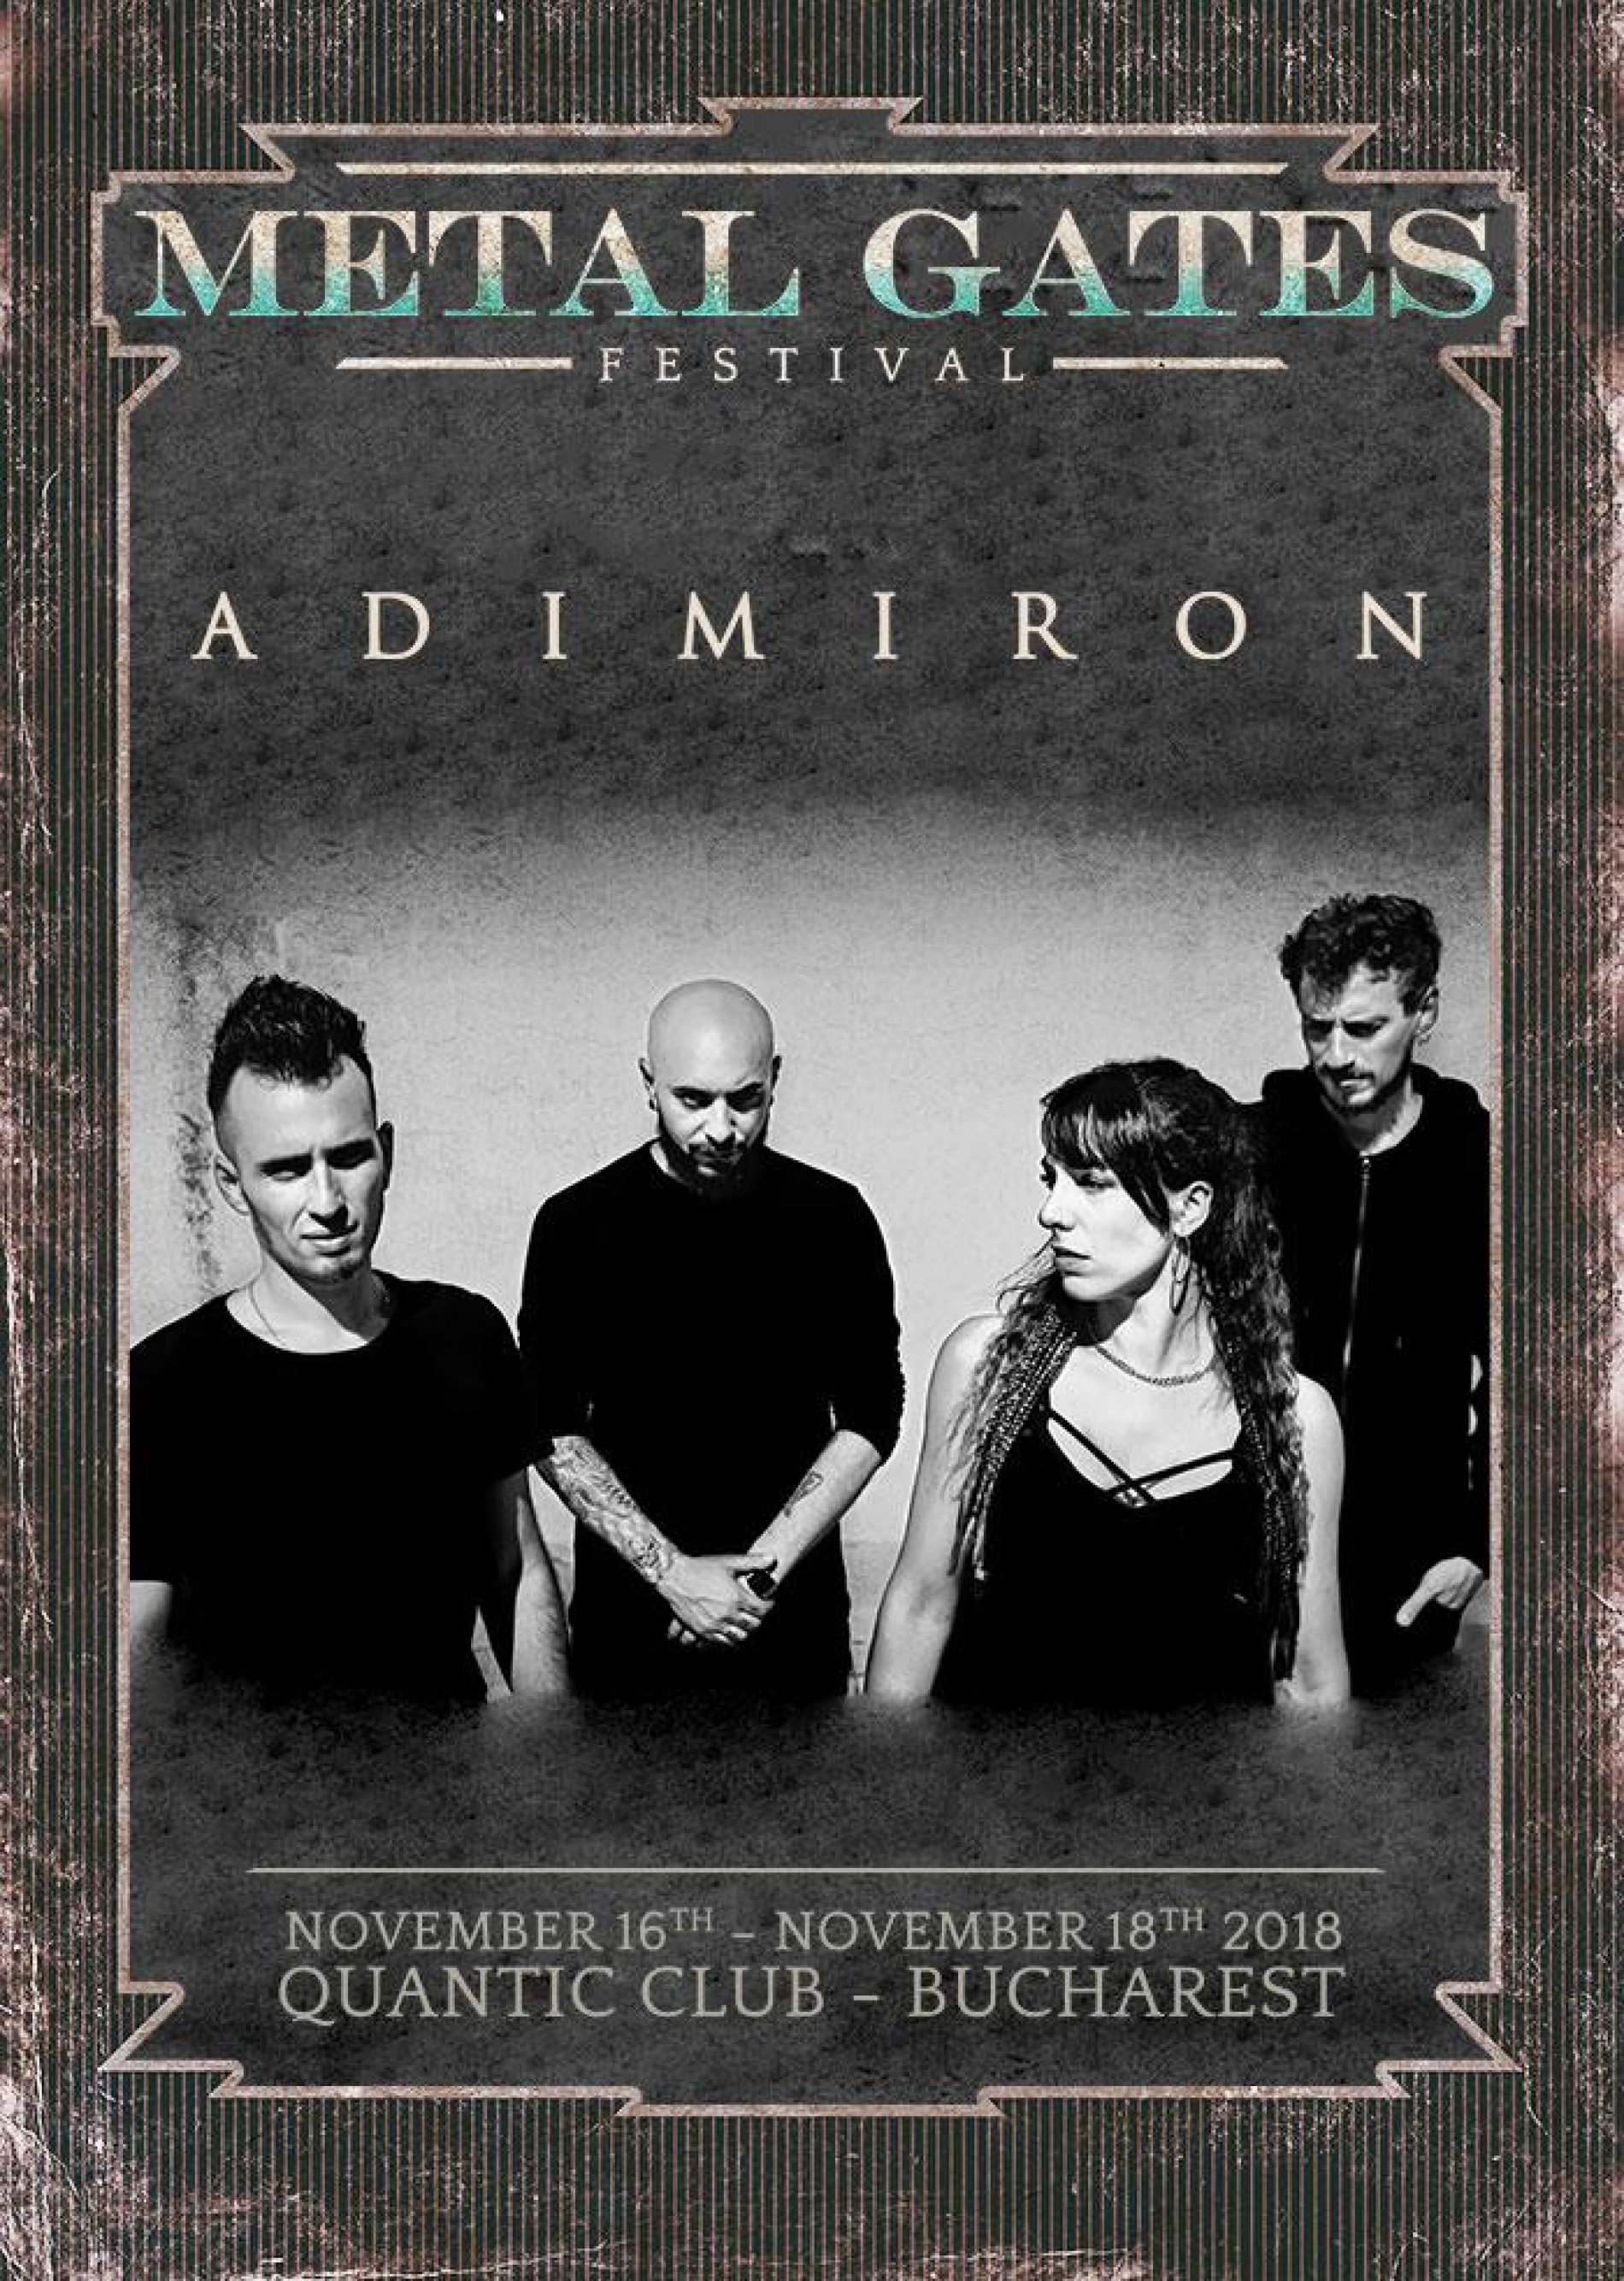 Adimiron și Ocean of Grief vor concerta la Metal Gates Festival 2018